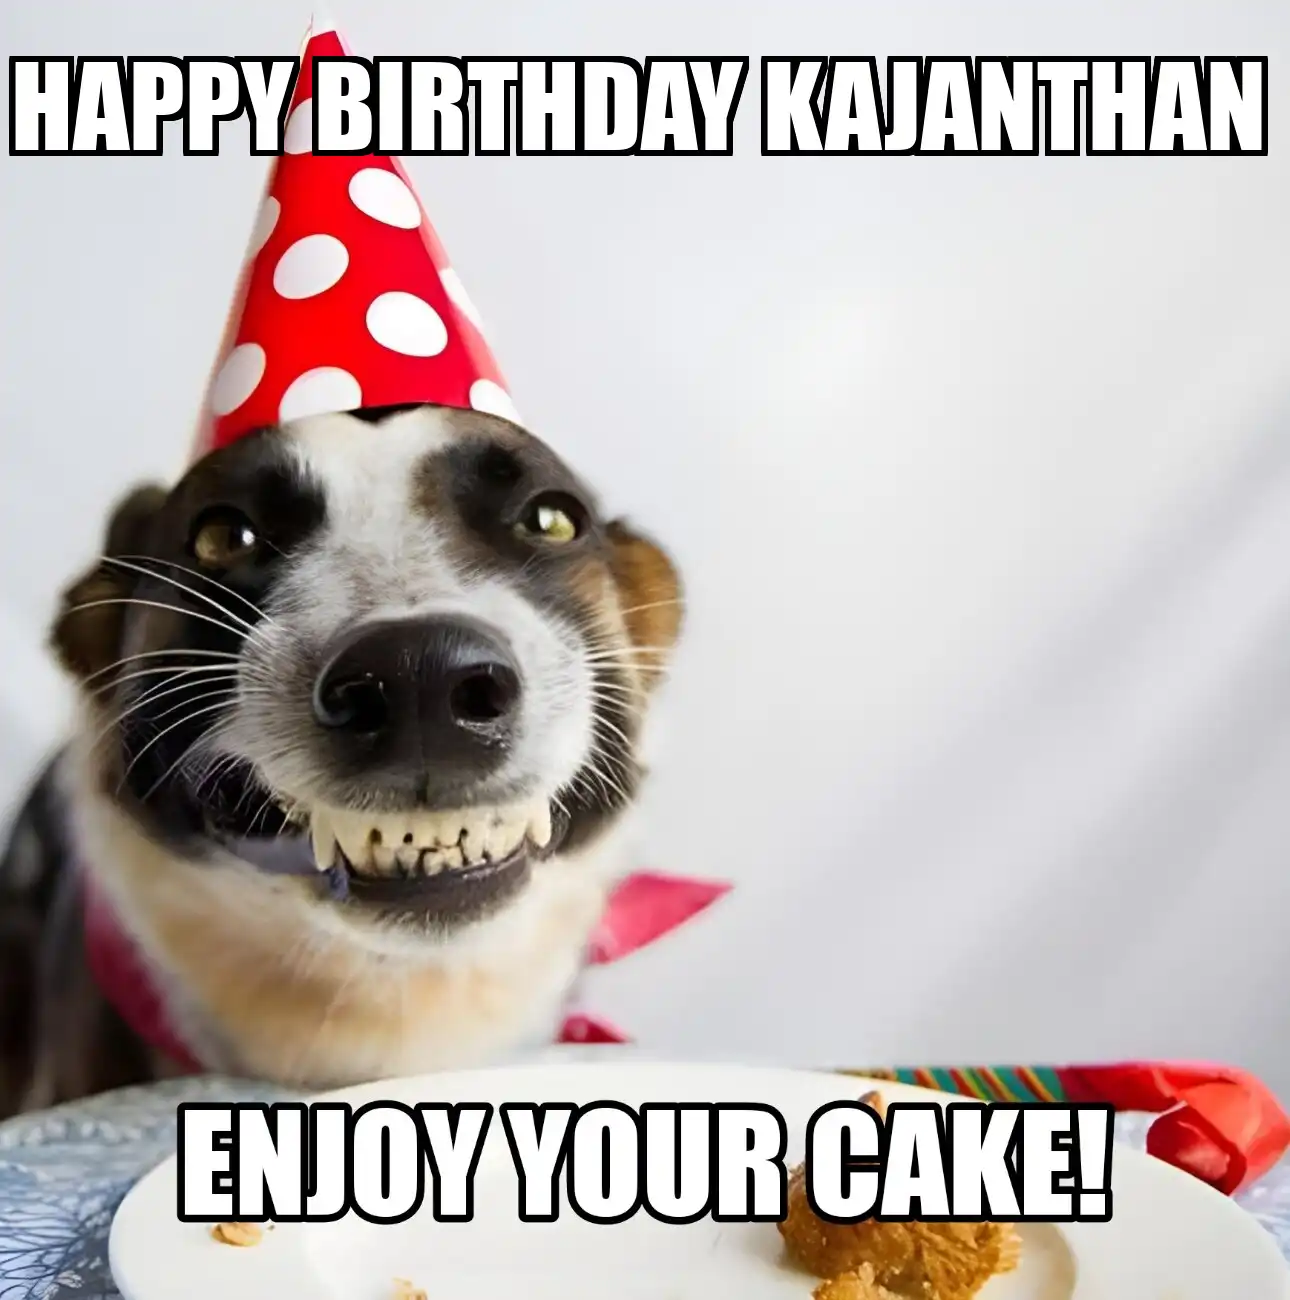 Happy Birthday Kajanthan Enjoy Your Cake Dog Meme